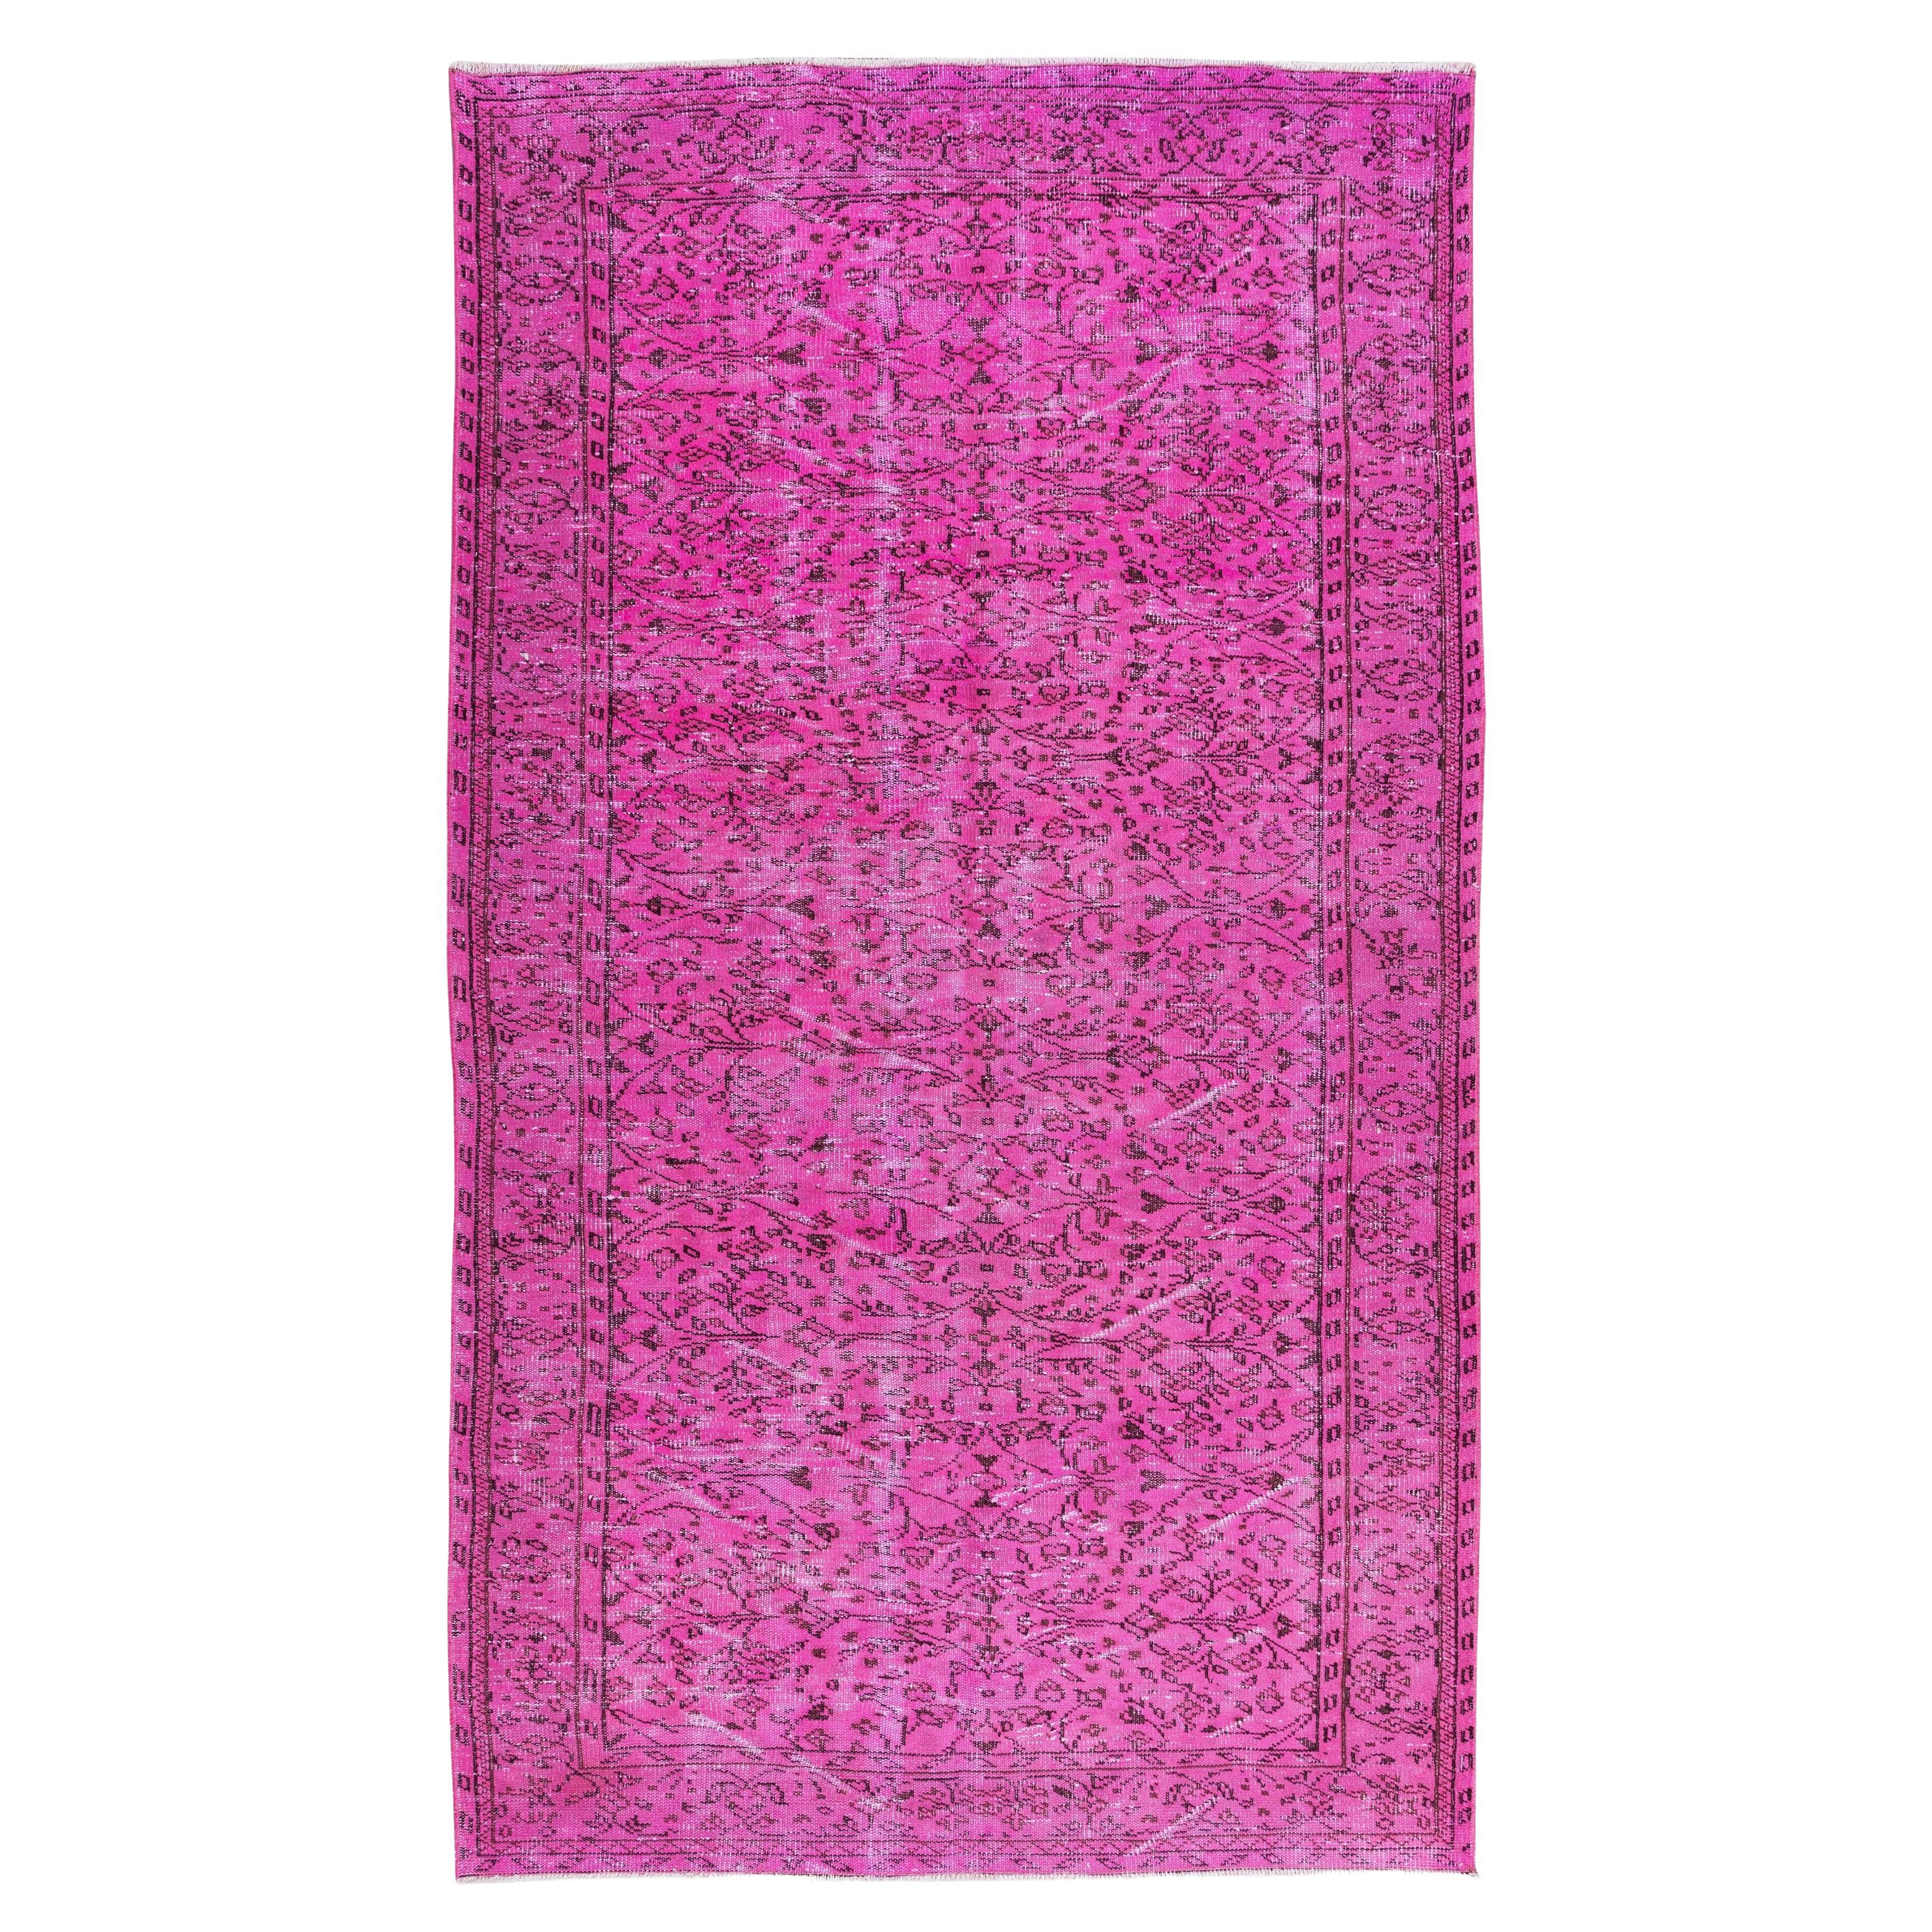 Vintage Handmade Turkish Rug Over-Dyed in Pink Color with Floral Design